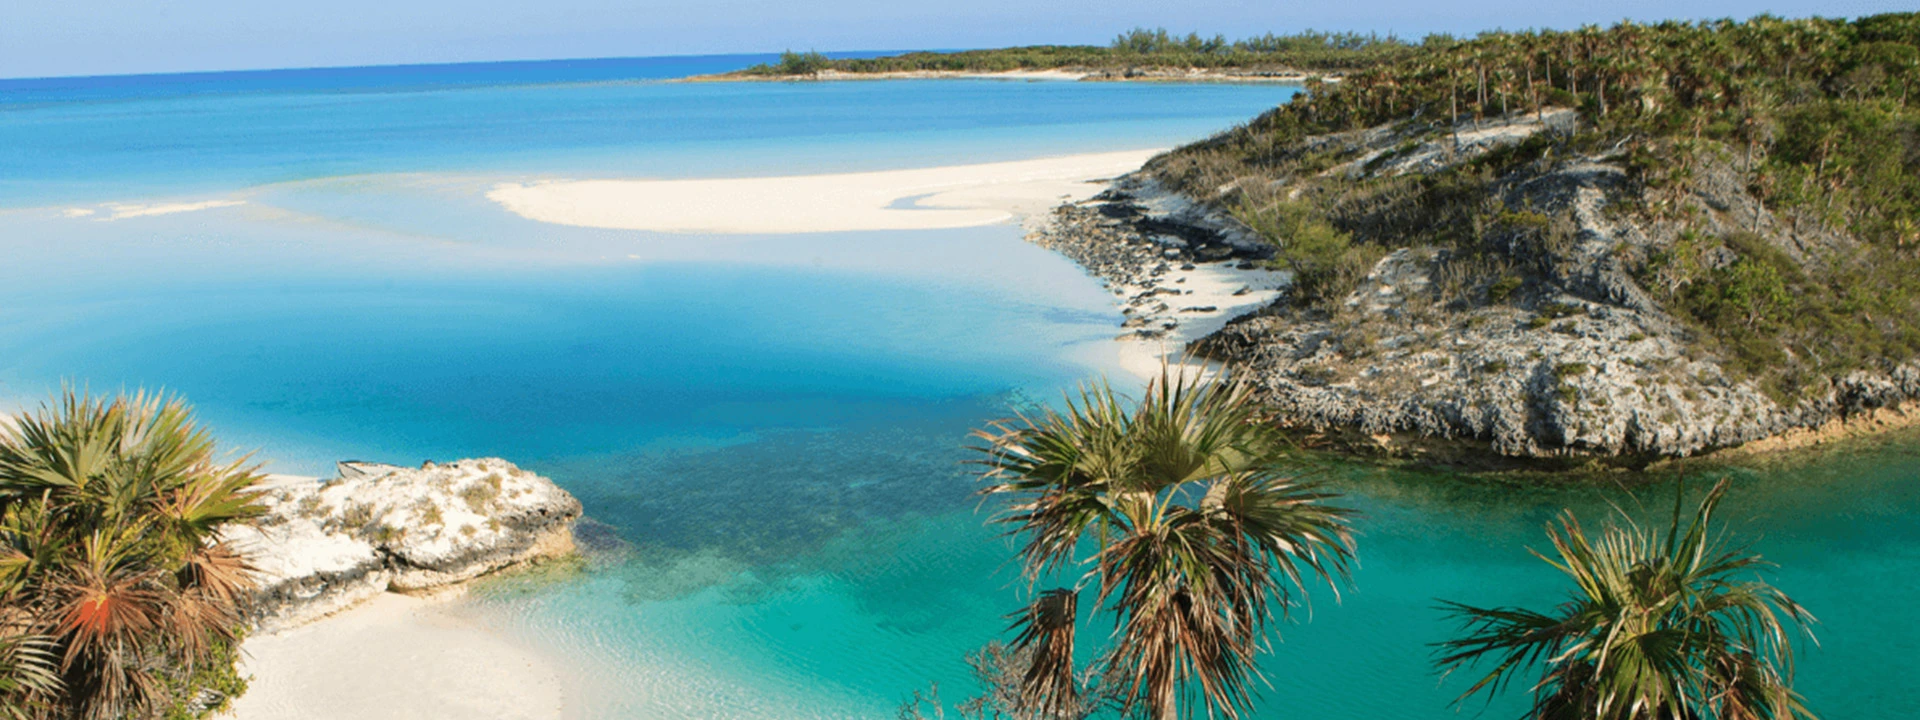 Visit Shroud Cay island in the Bahamas on a Caribbean cruise